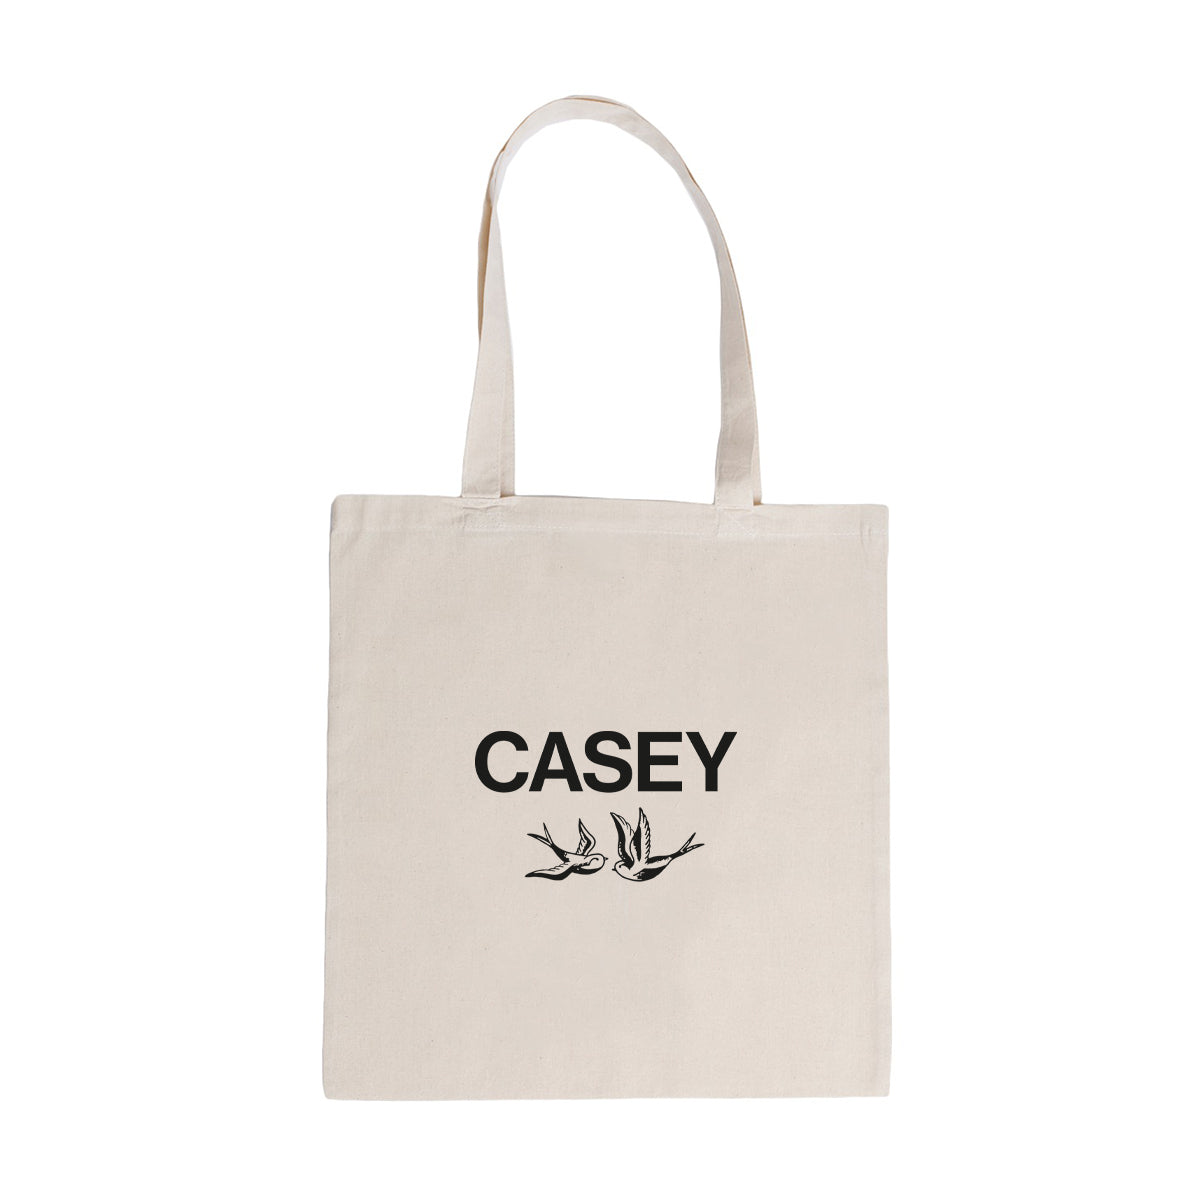 CASEY "Swallows" Tote Bag